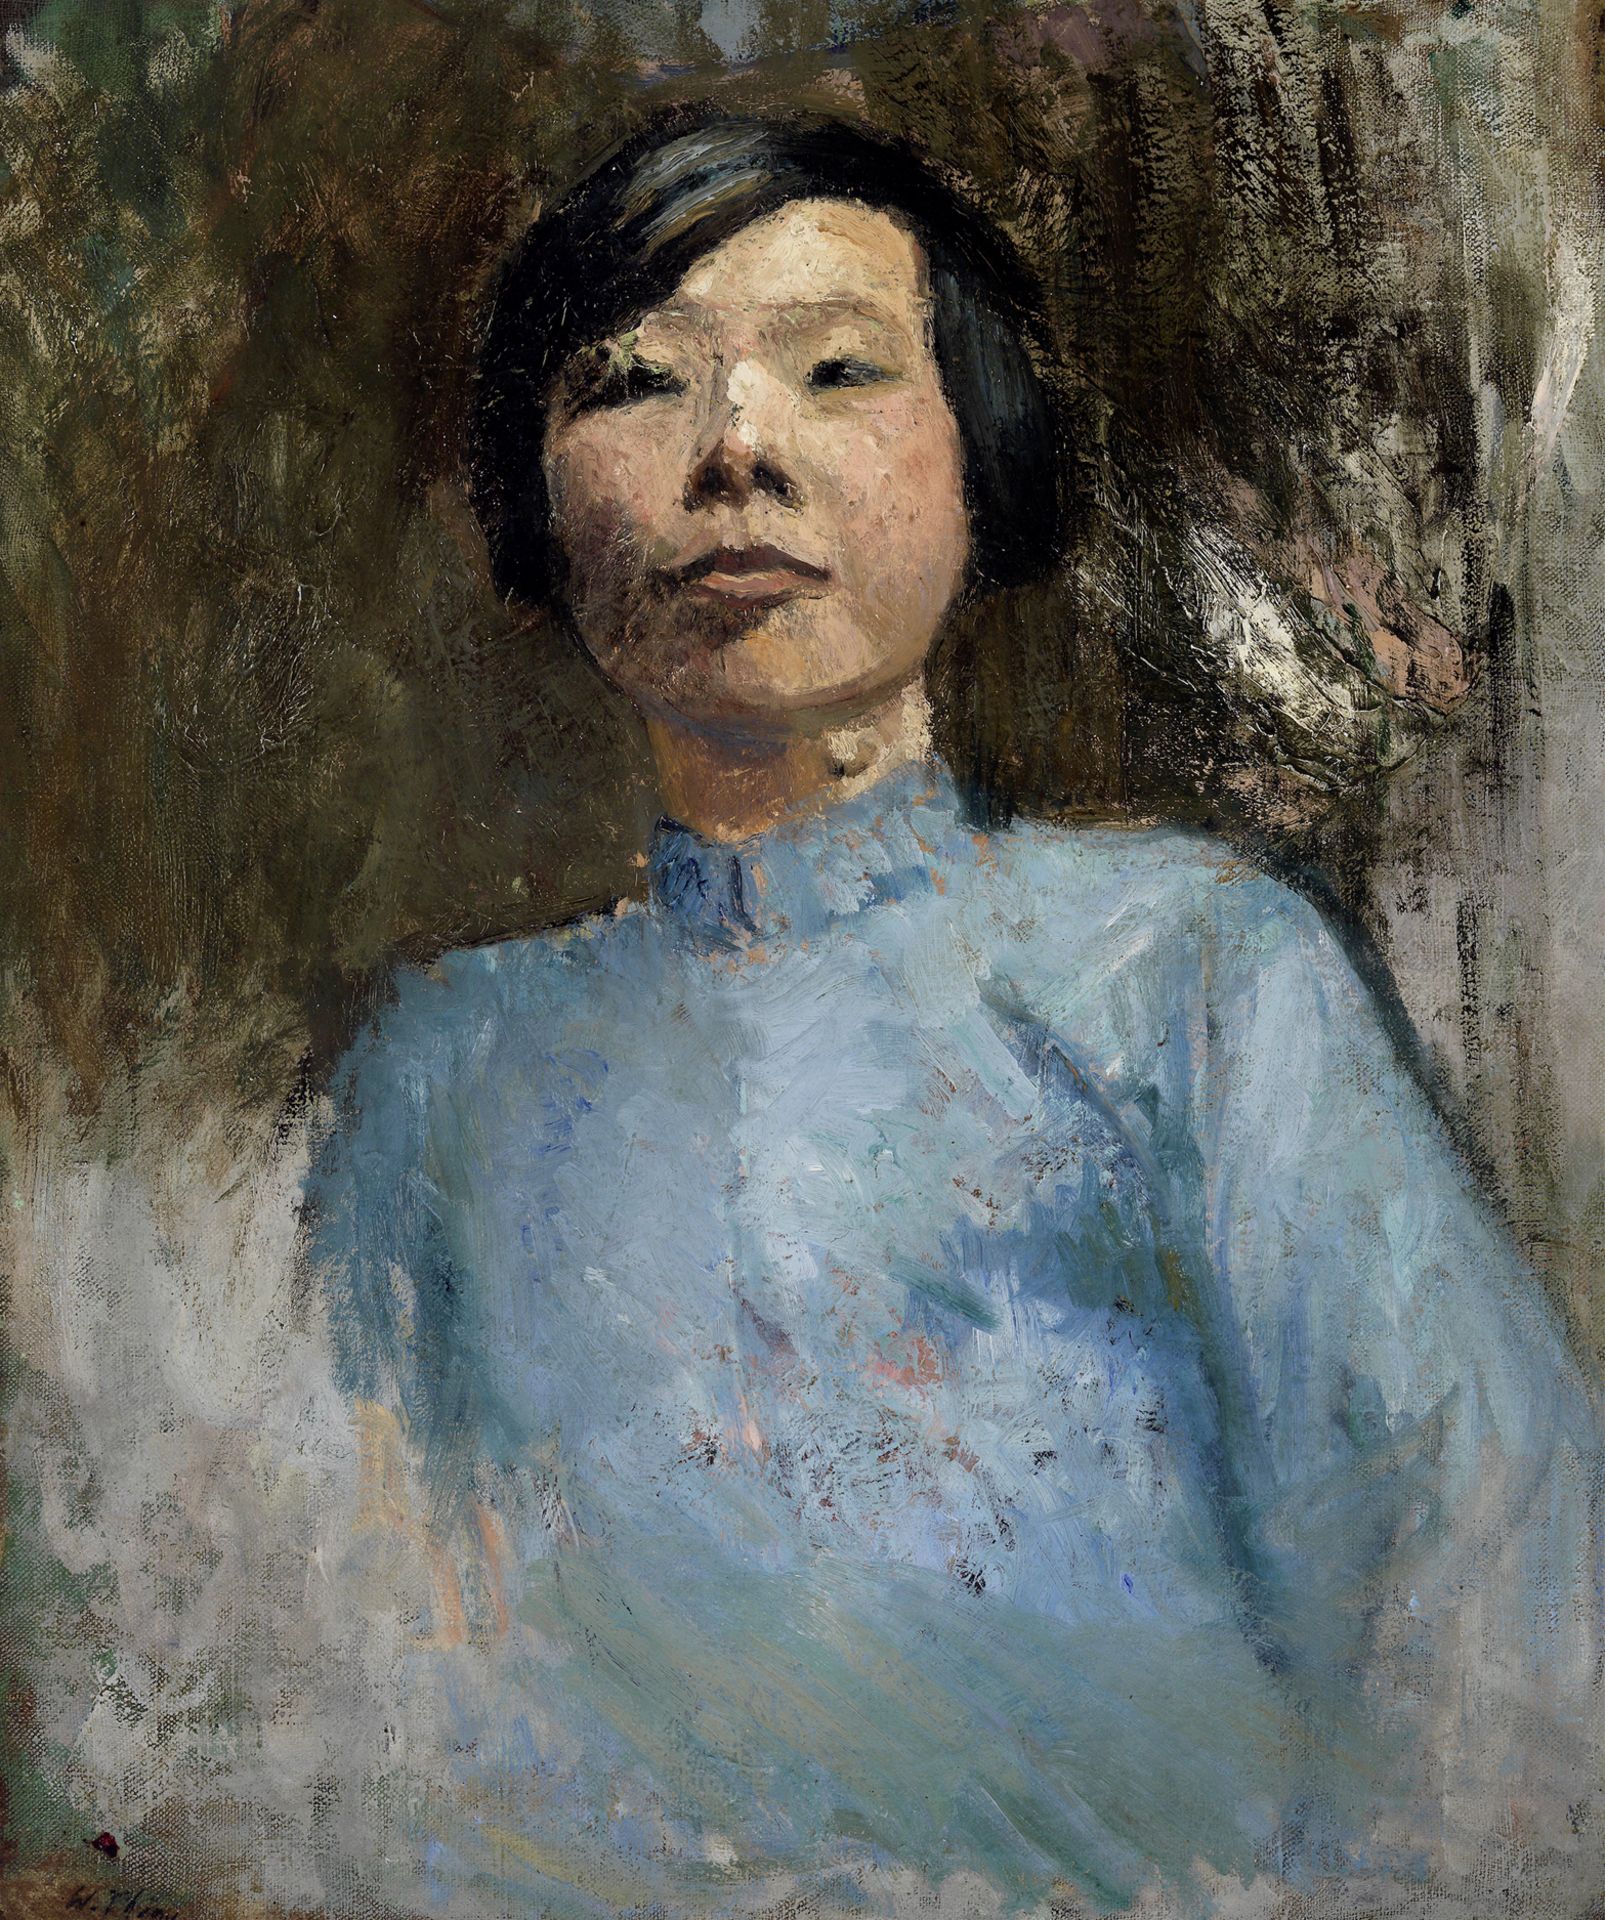 Wilhelm Thöny, Graz 1888 - 1949 New York, Portrait einer Chinesin